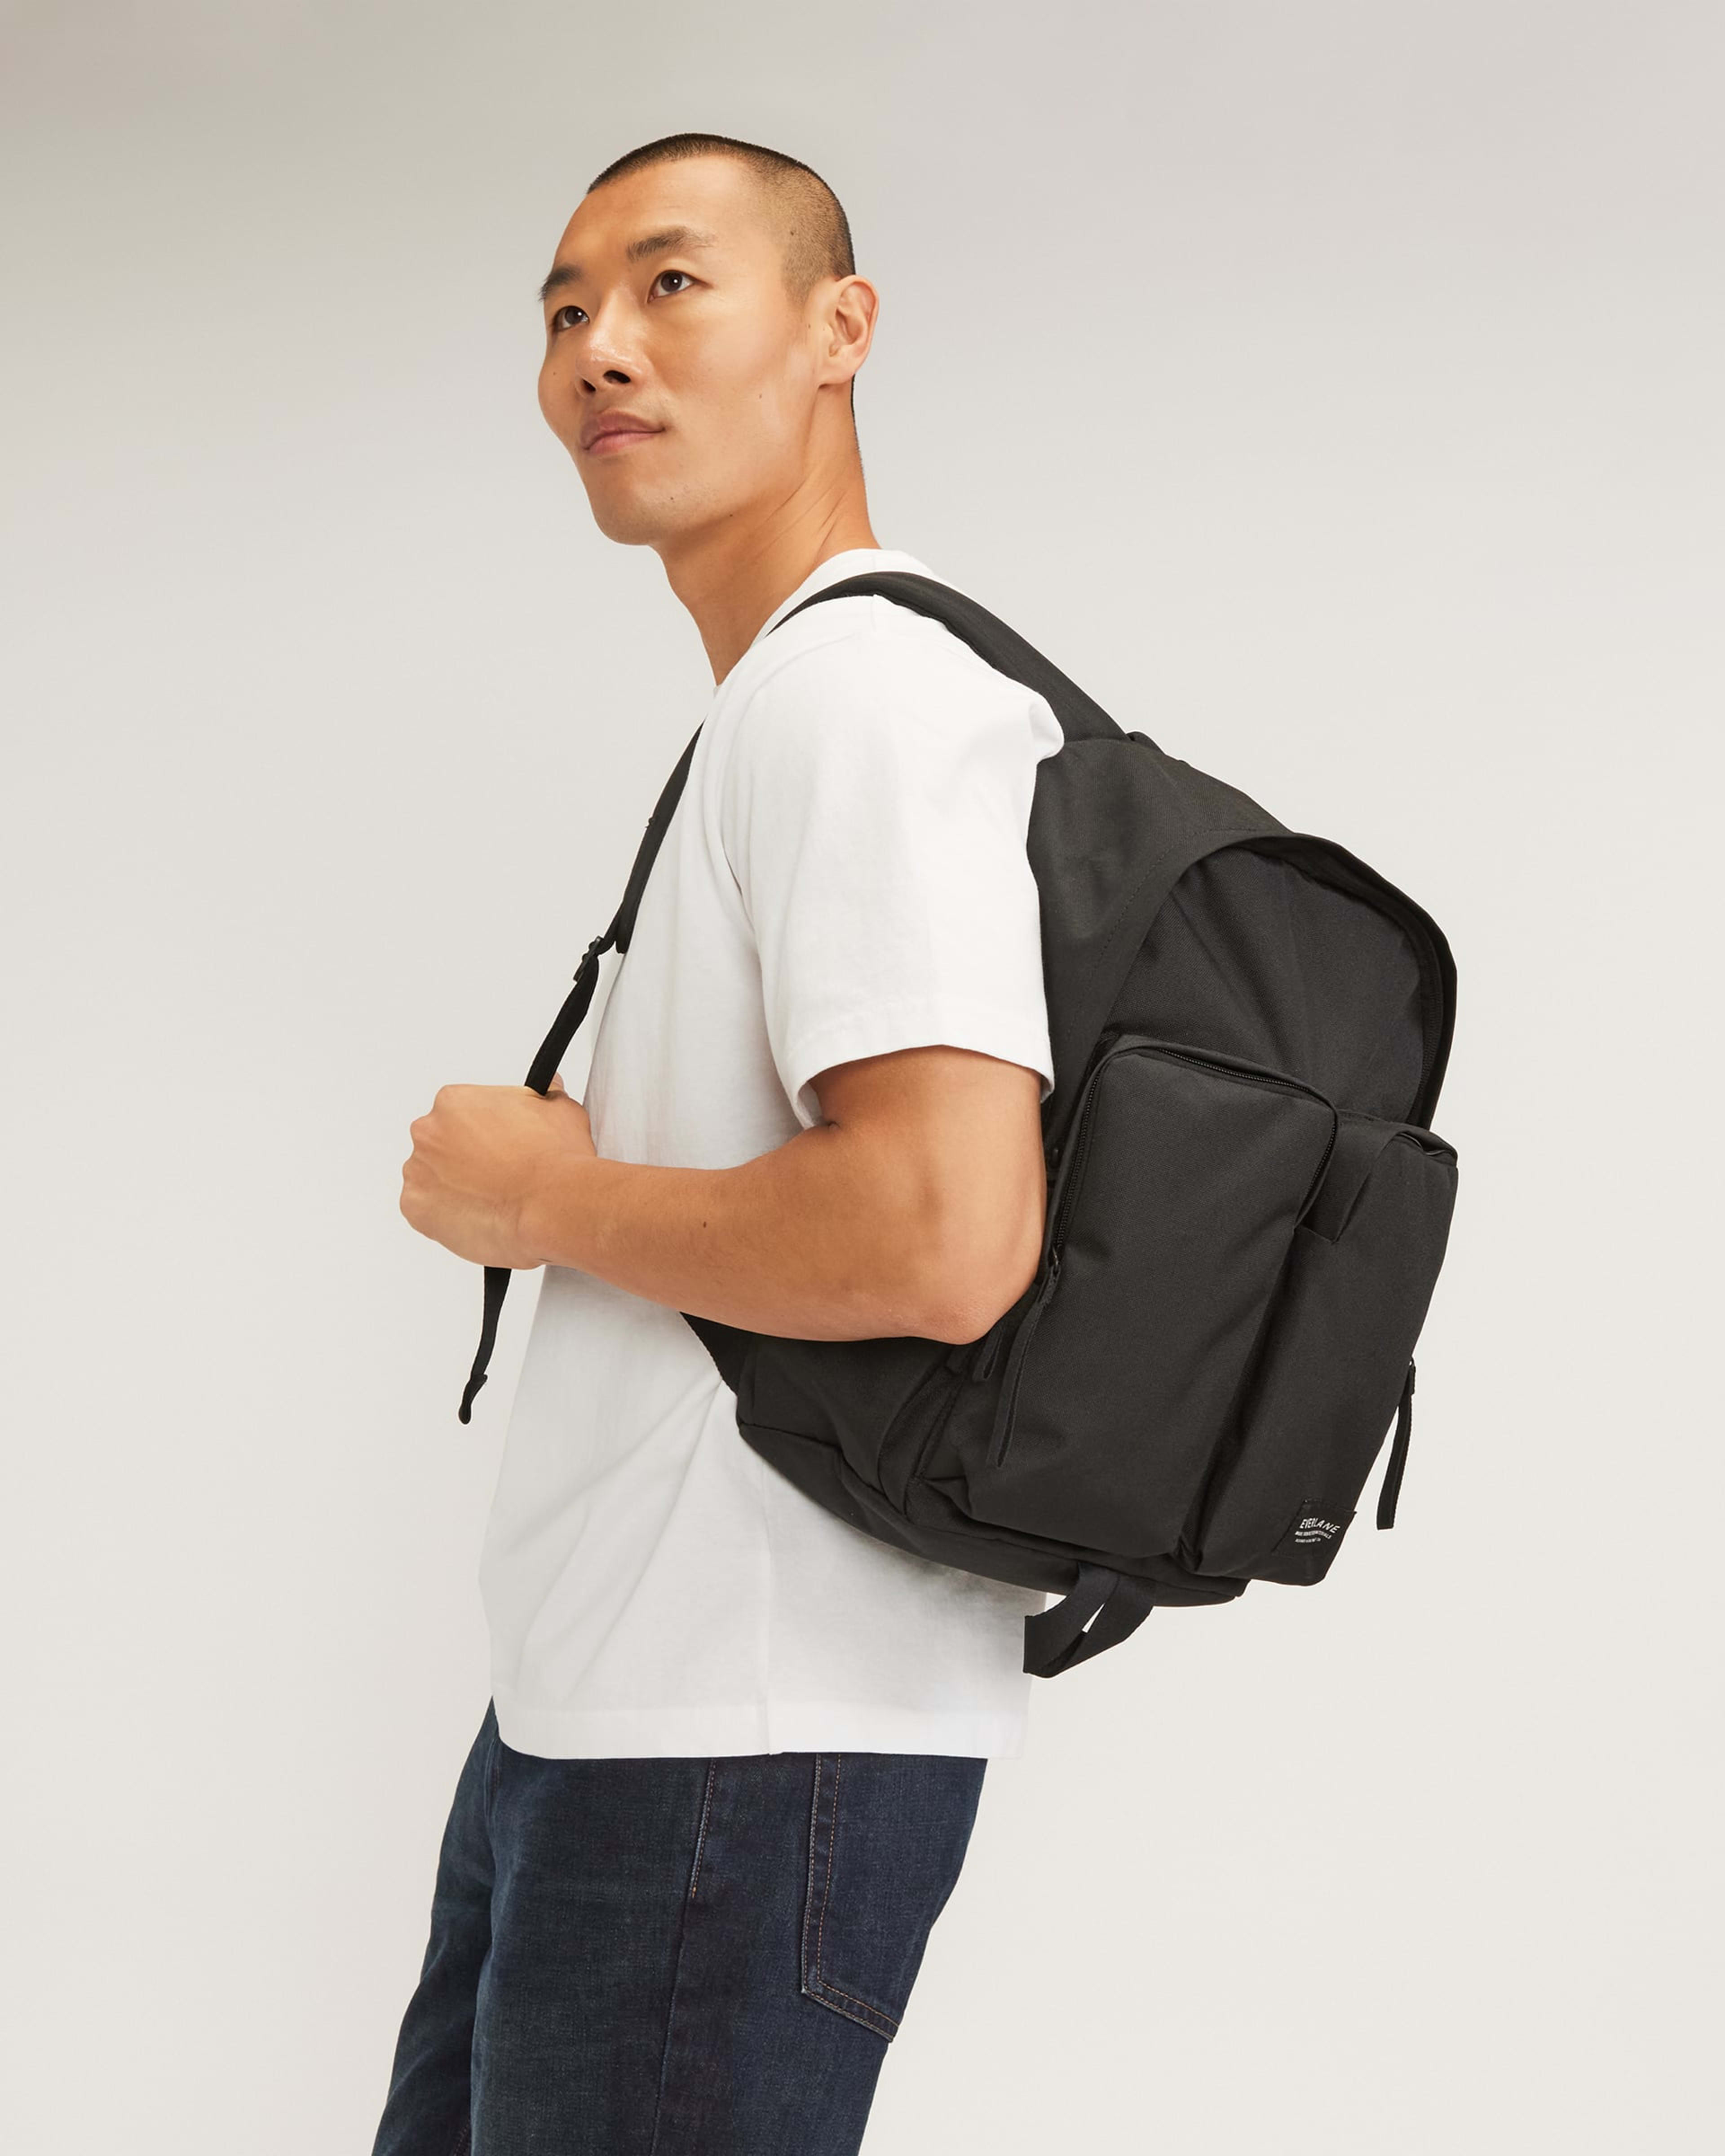 The ReNew Transit Utility Backpack Black – Everlane